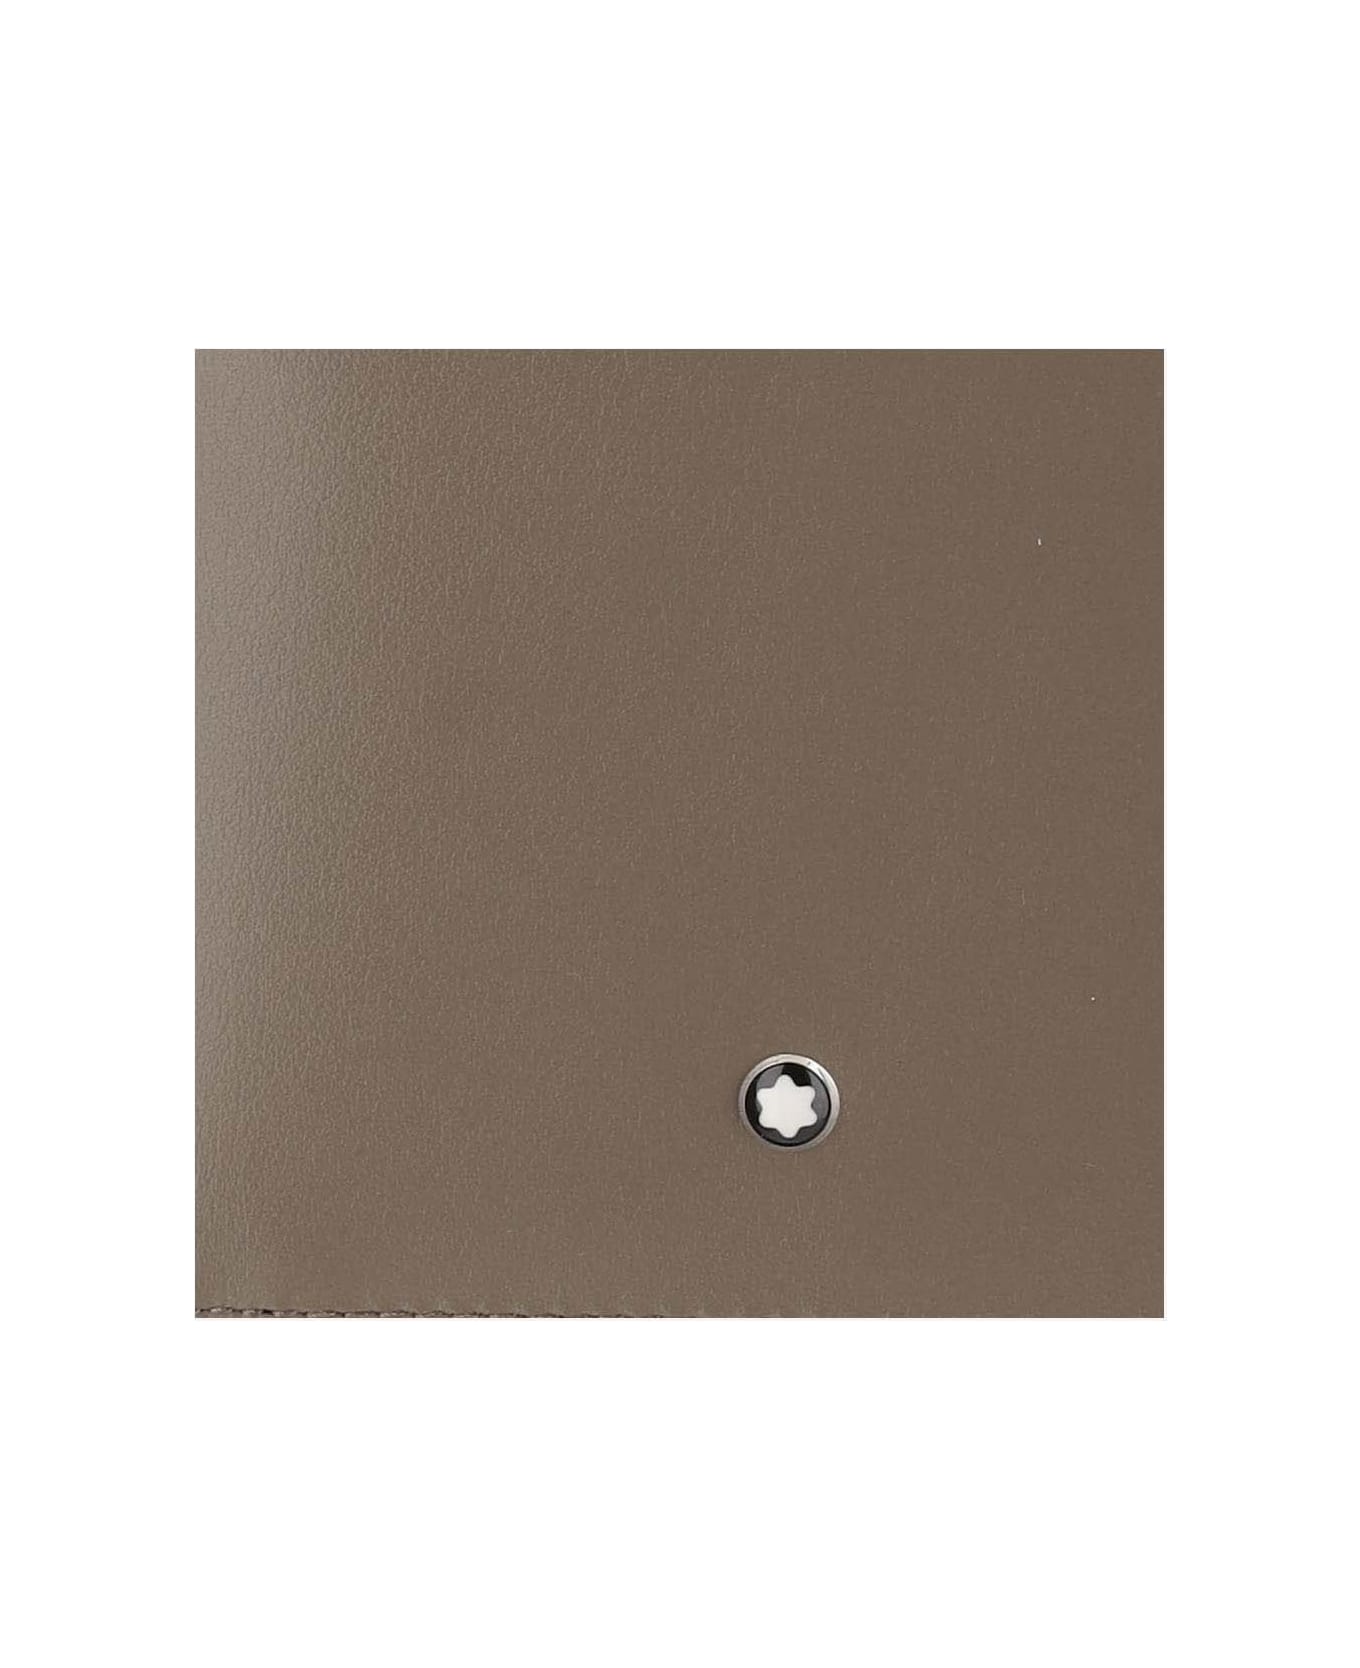 Montblanc Meisterstück Wallet 8 Compartments - Brown